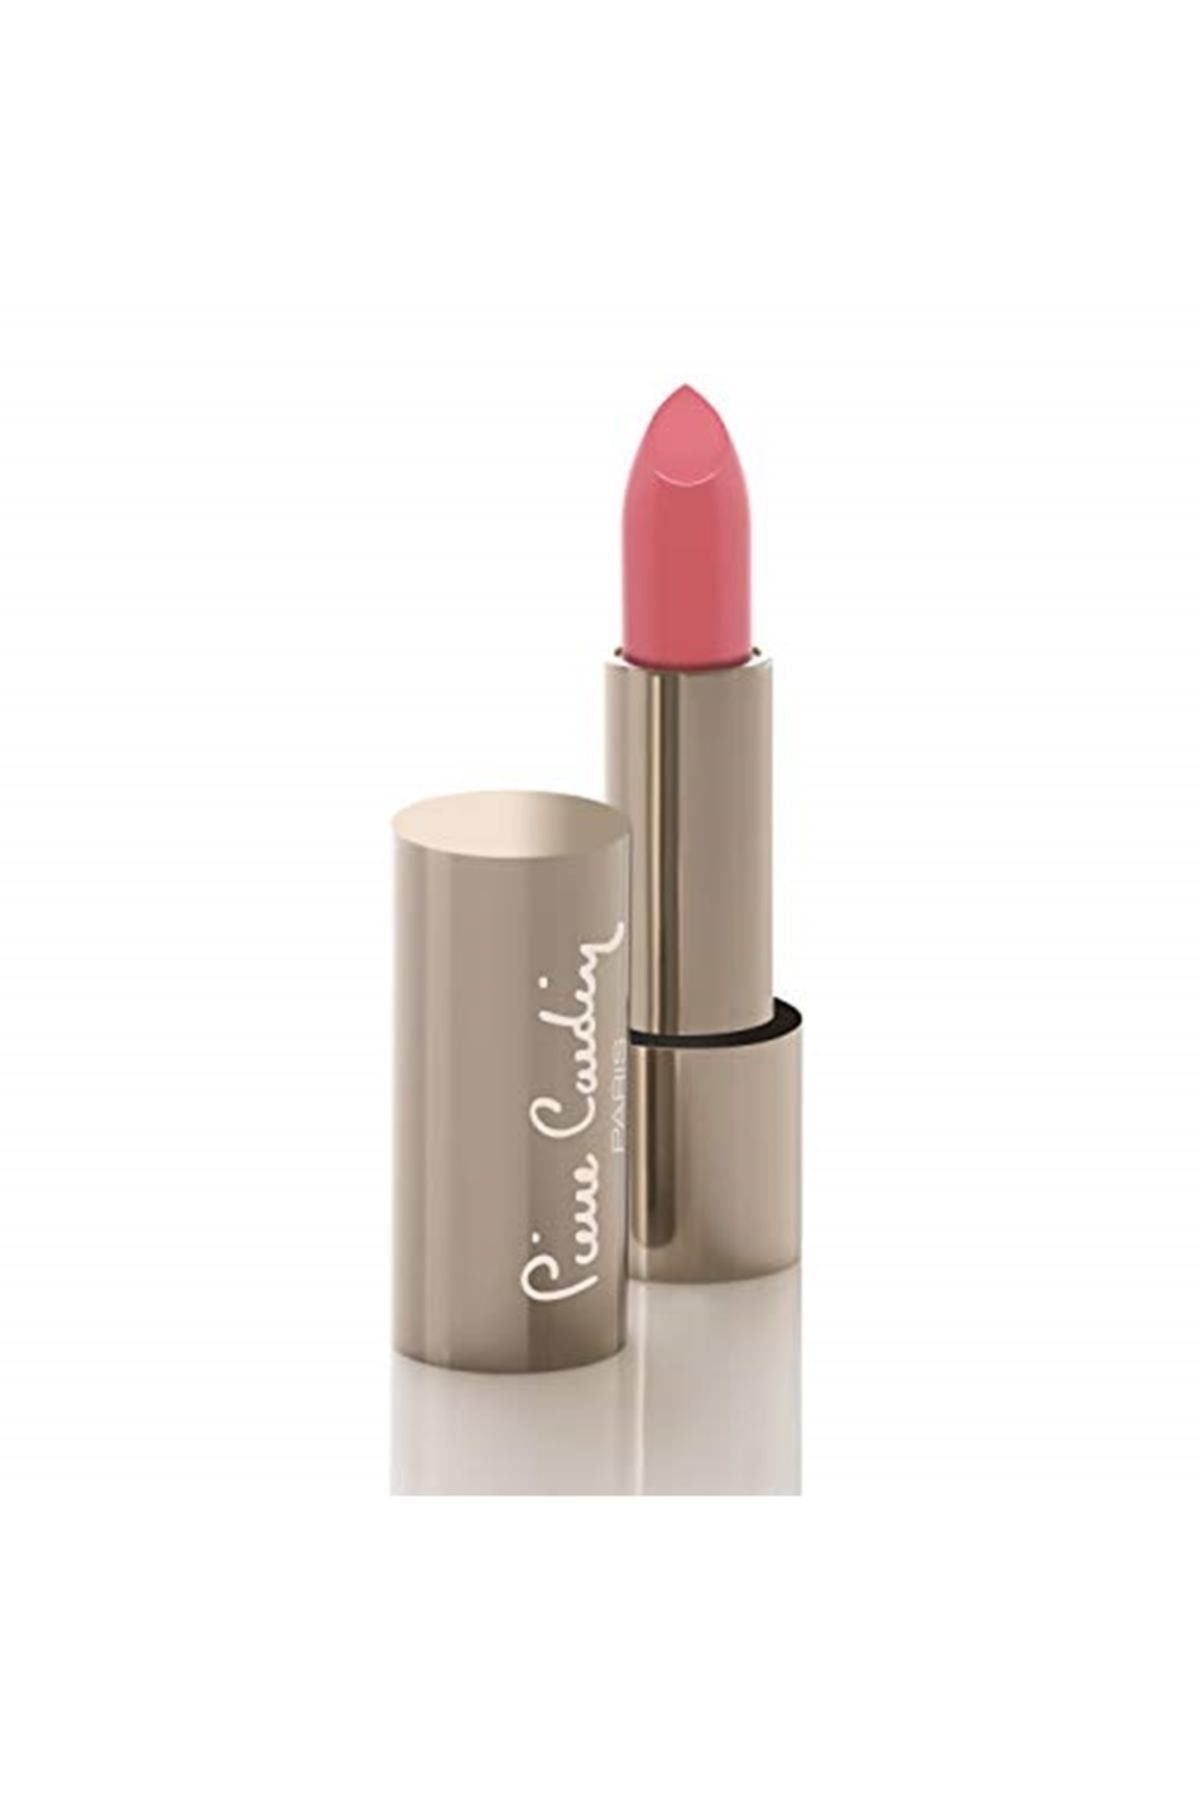 Pierre Cardin Magnetic Dream Lipstick - Spice Rose -253 1 Paket (1 X 150 G)